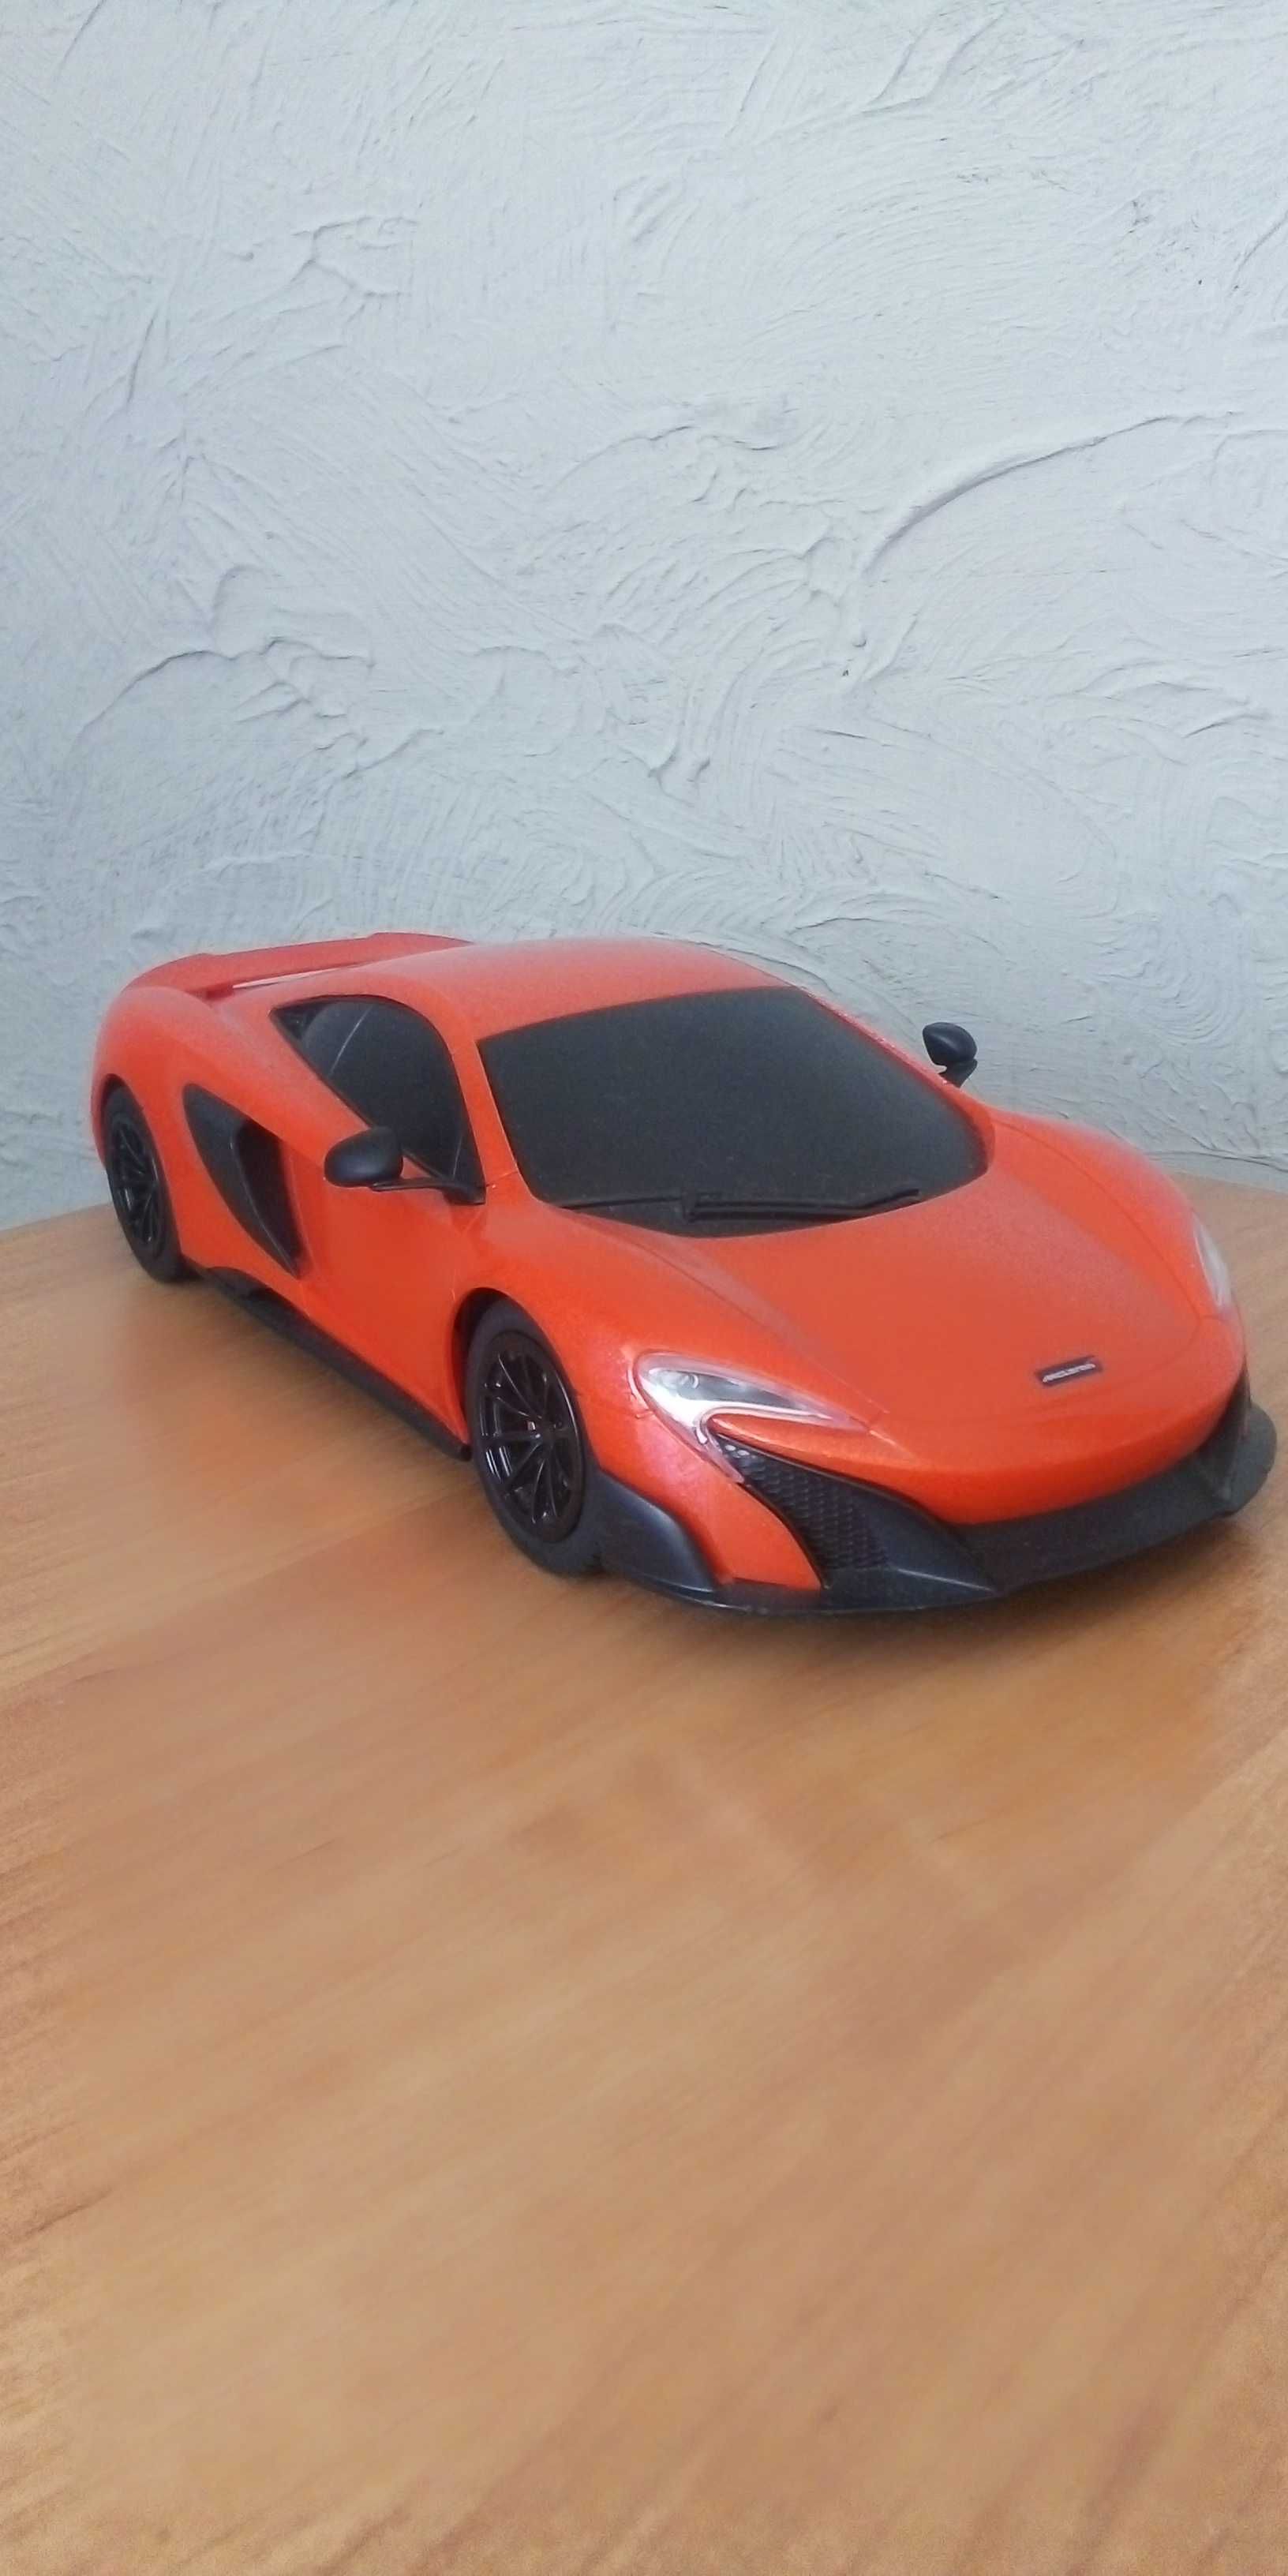 Samochód McLaren na Pilota